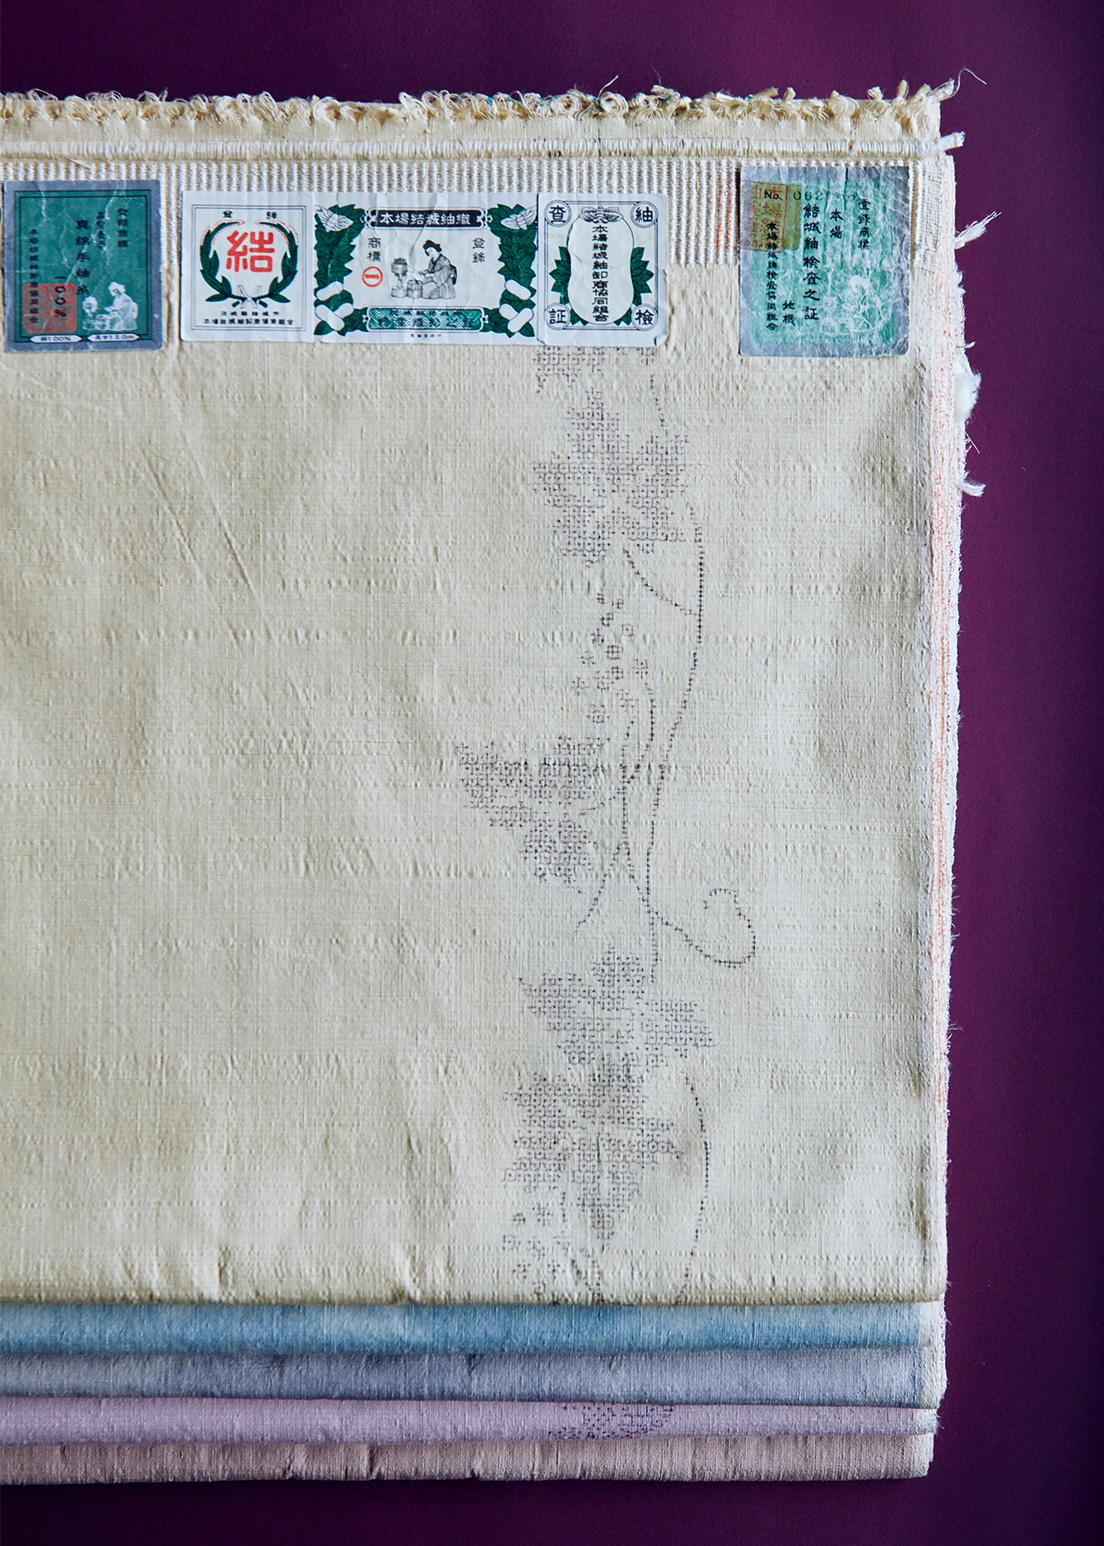 Purchase No. 31【Yuki Tsumugi Textile】Beauty spun and woven by hand. A true wellspring of Japanese silken textile.